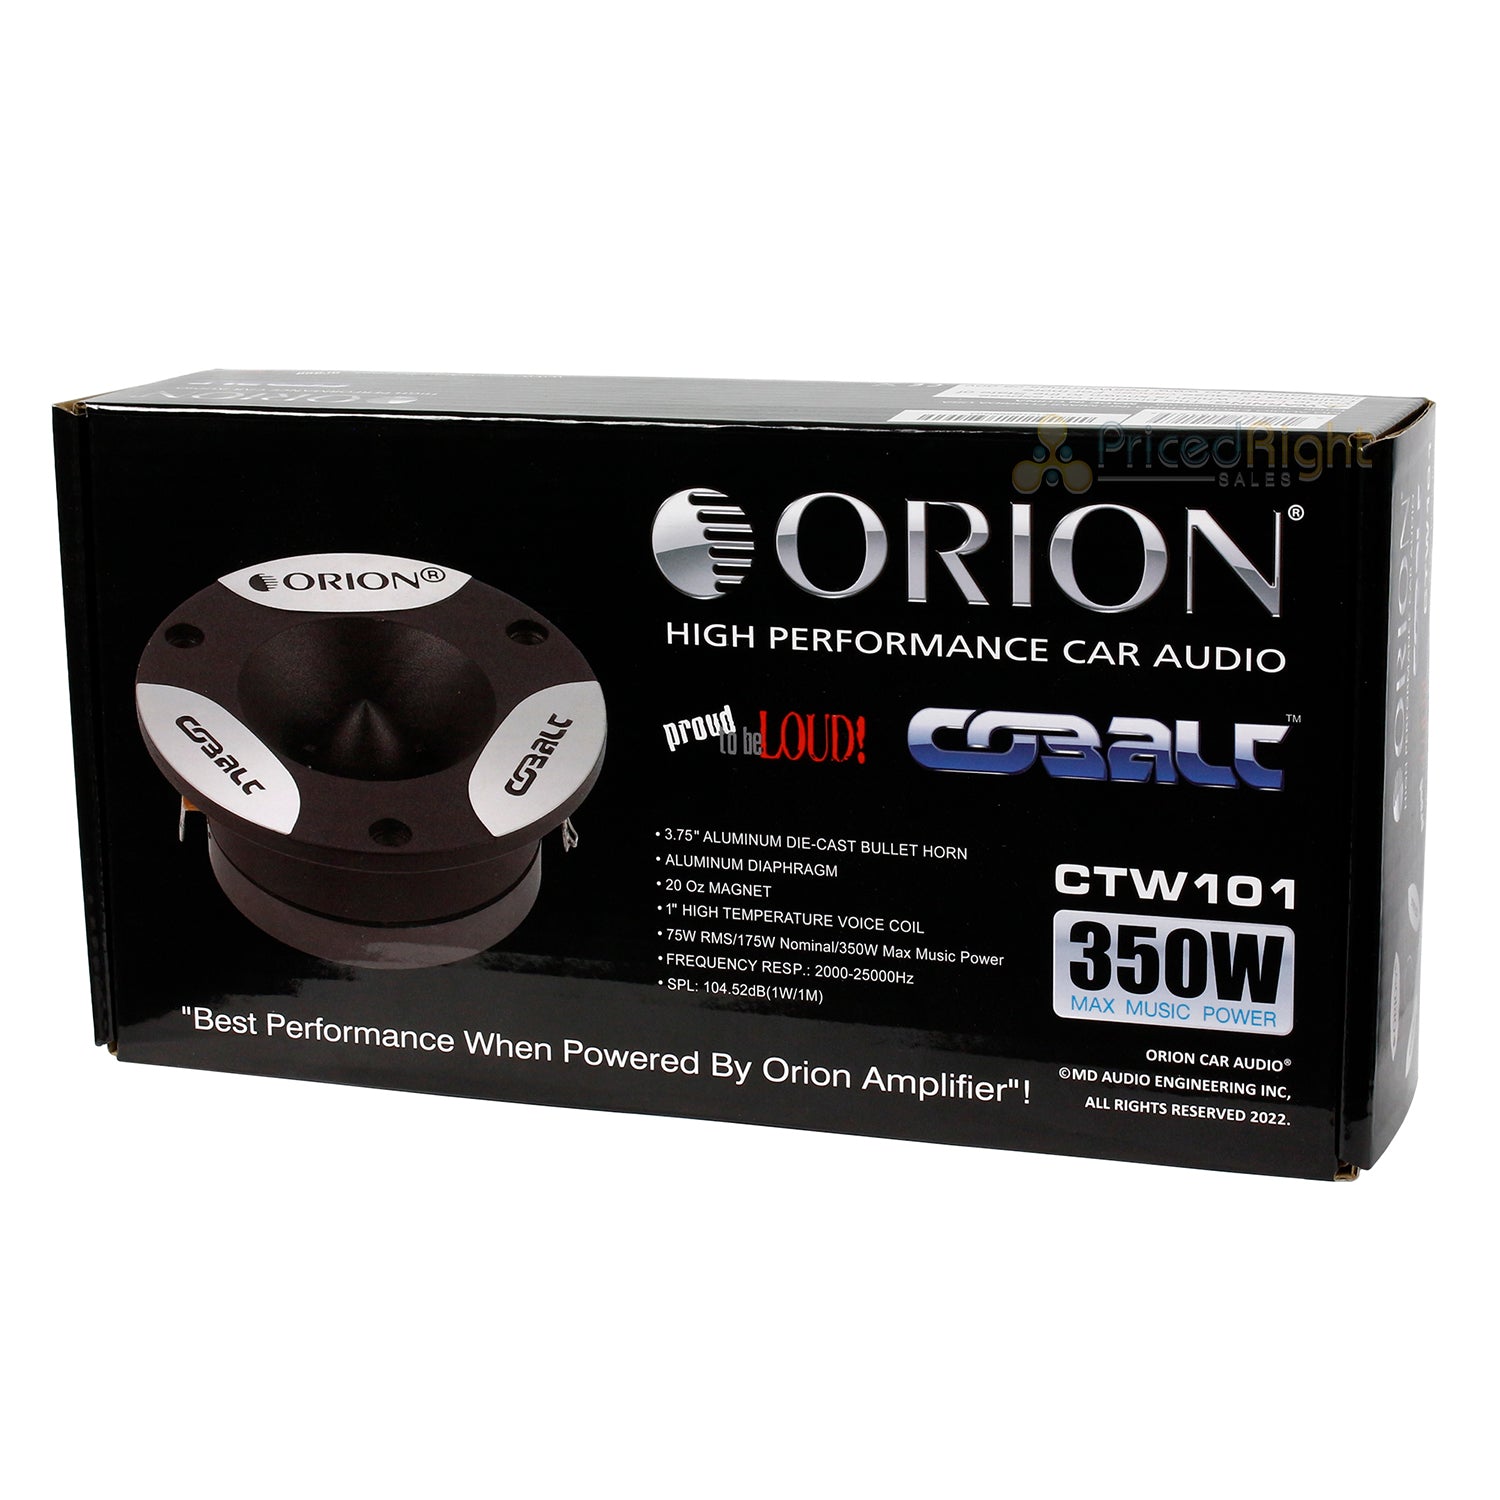 6 Orion Cobalt 3.75" Super Tweeters 350W Max Power Car Audio Three Pair CTW101